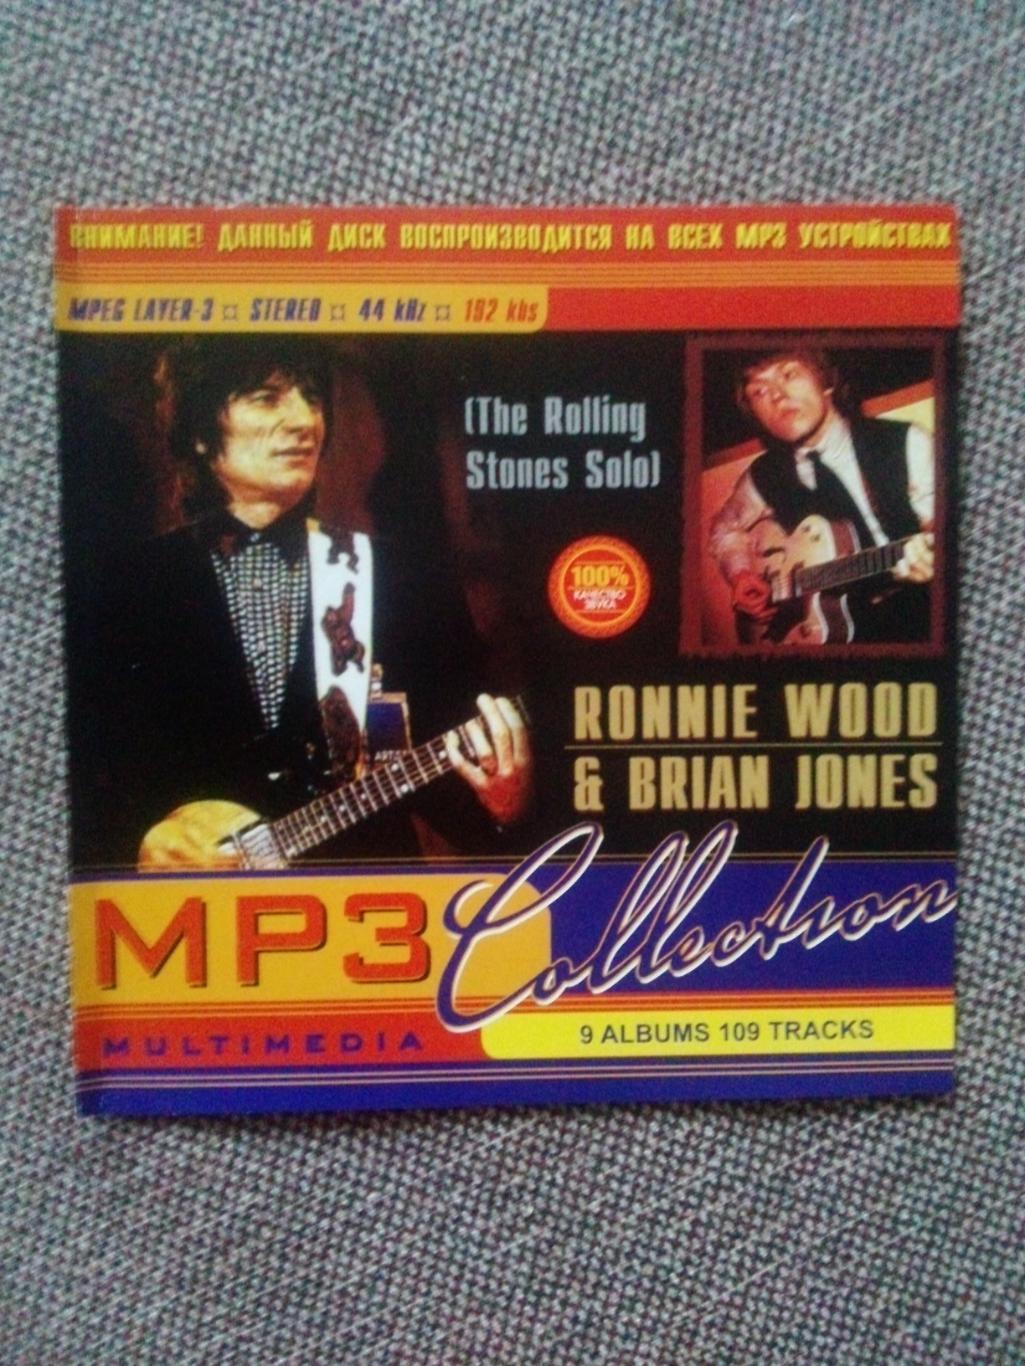 MP - 3 CD диск : Гитаристы группы Rolling Stones : Ronnie Wood & Brain Jones